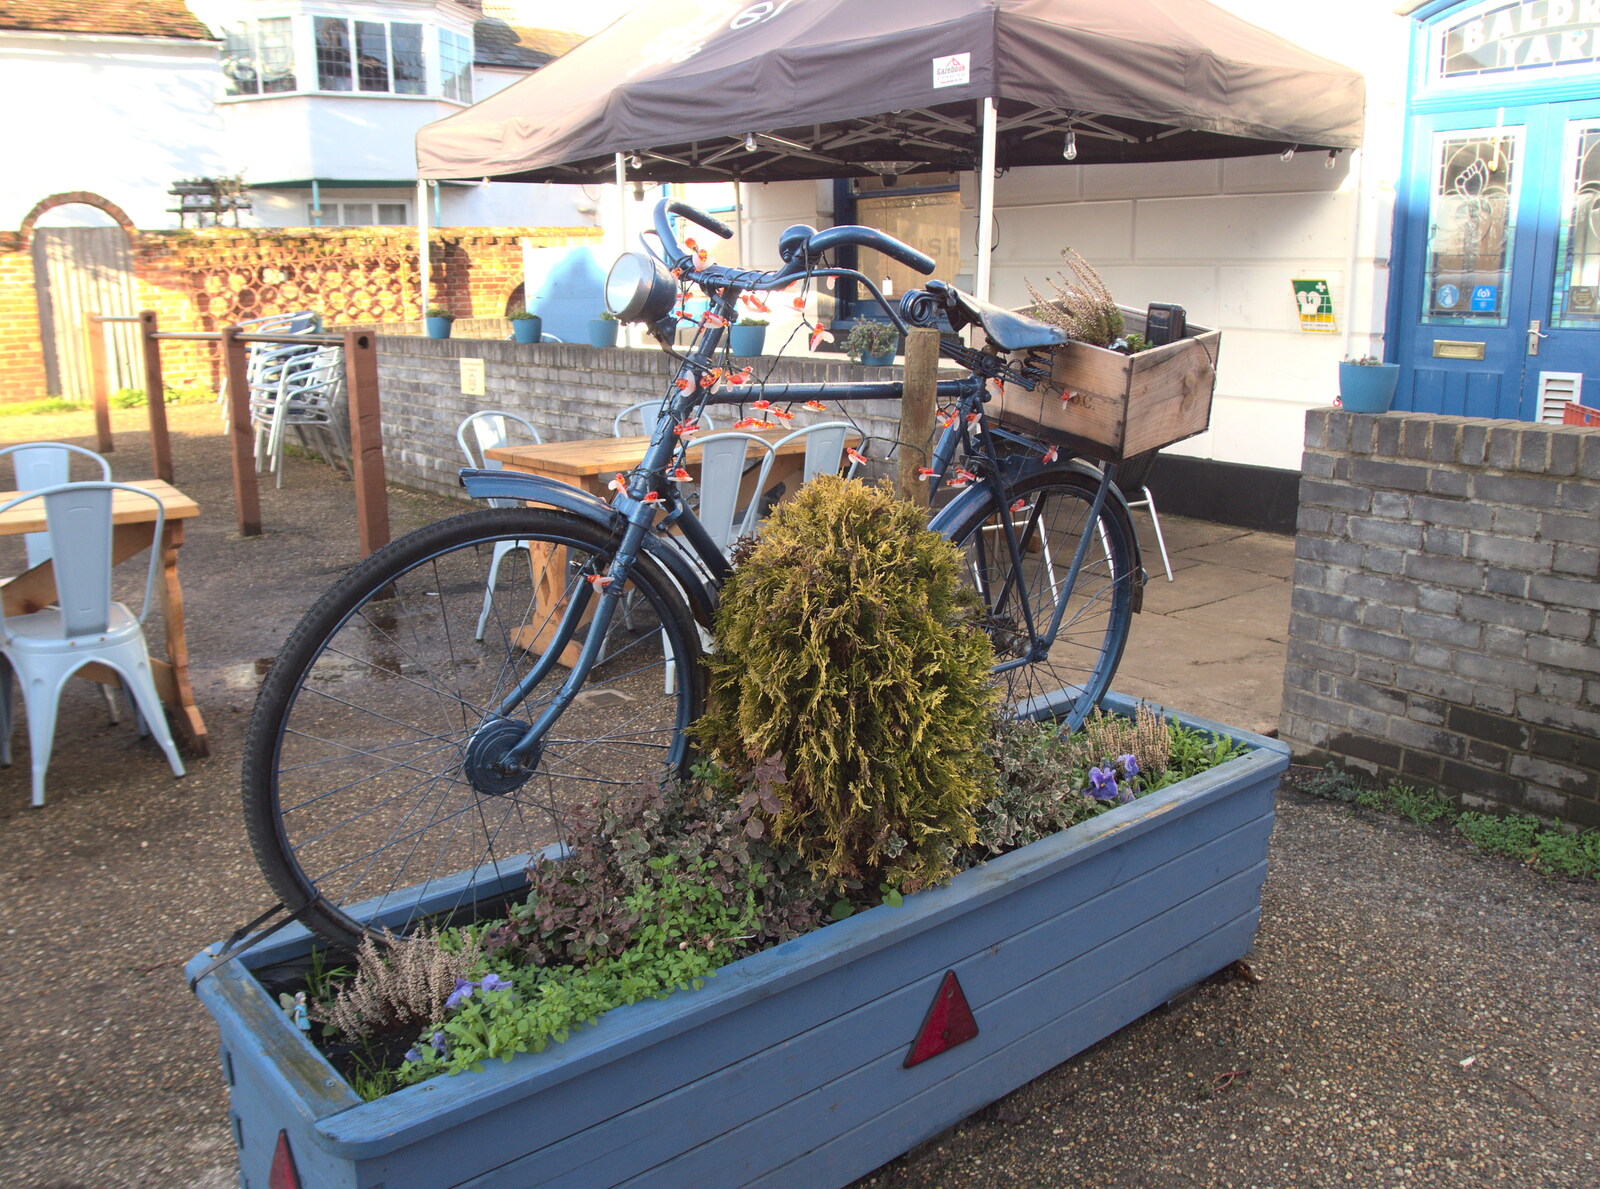 A Wander around Fair Green, Diss, Norfolk - 11th January 2023: A bike in a flower box by the Angel Café